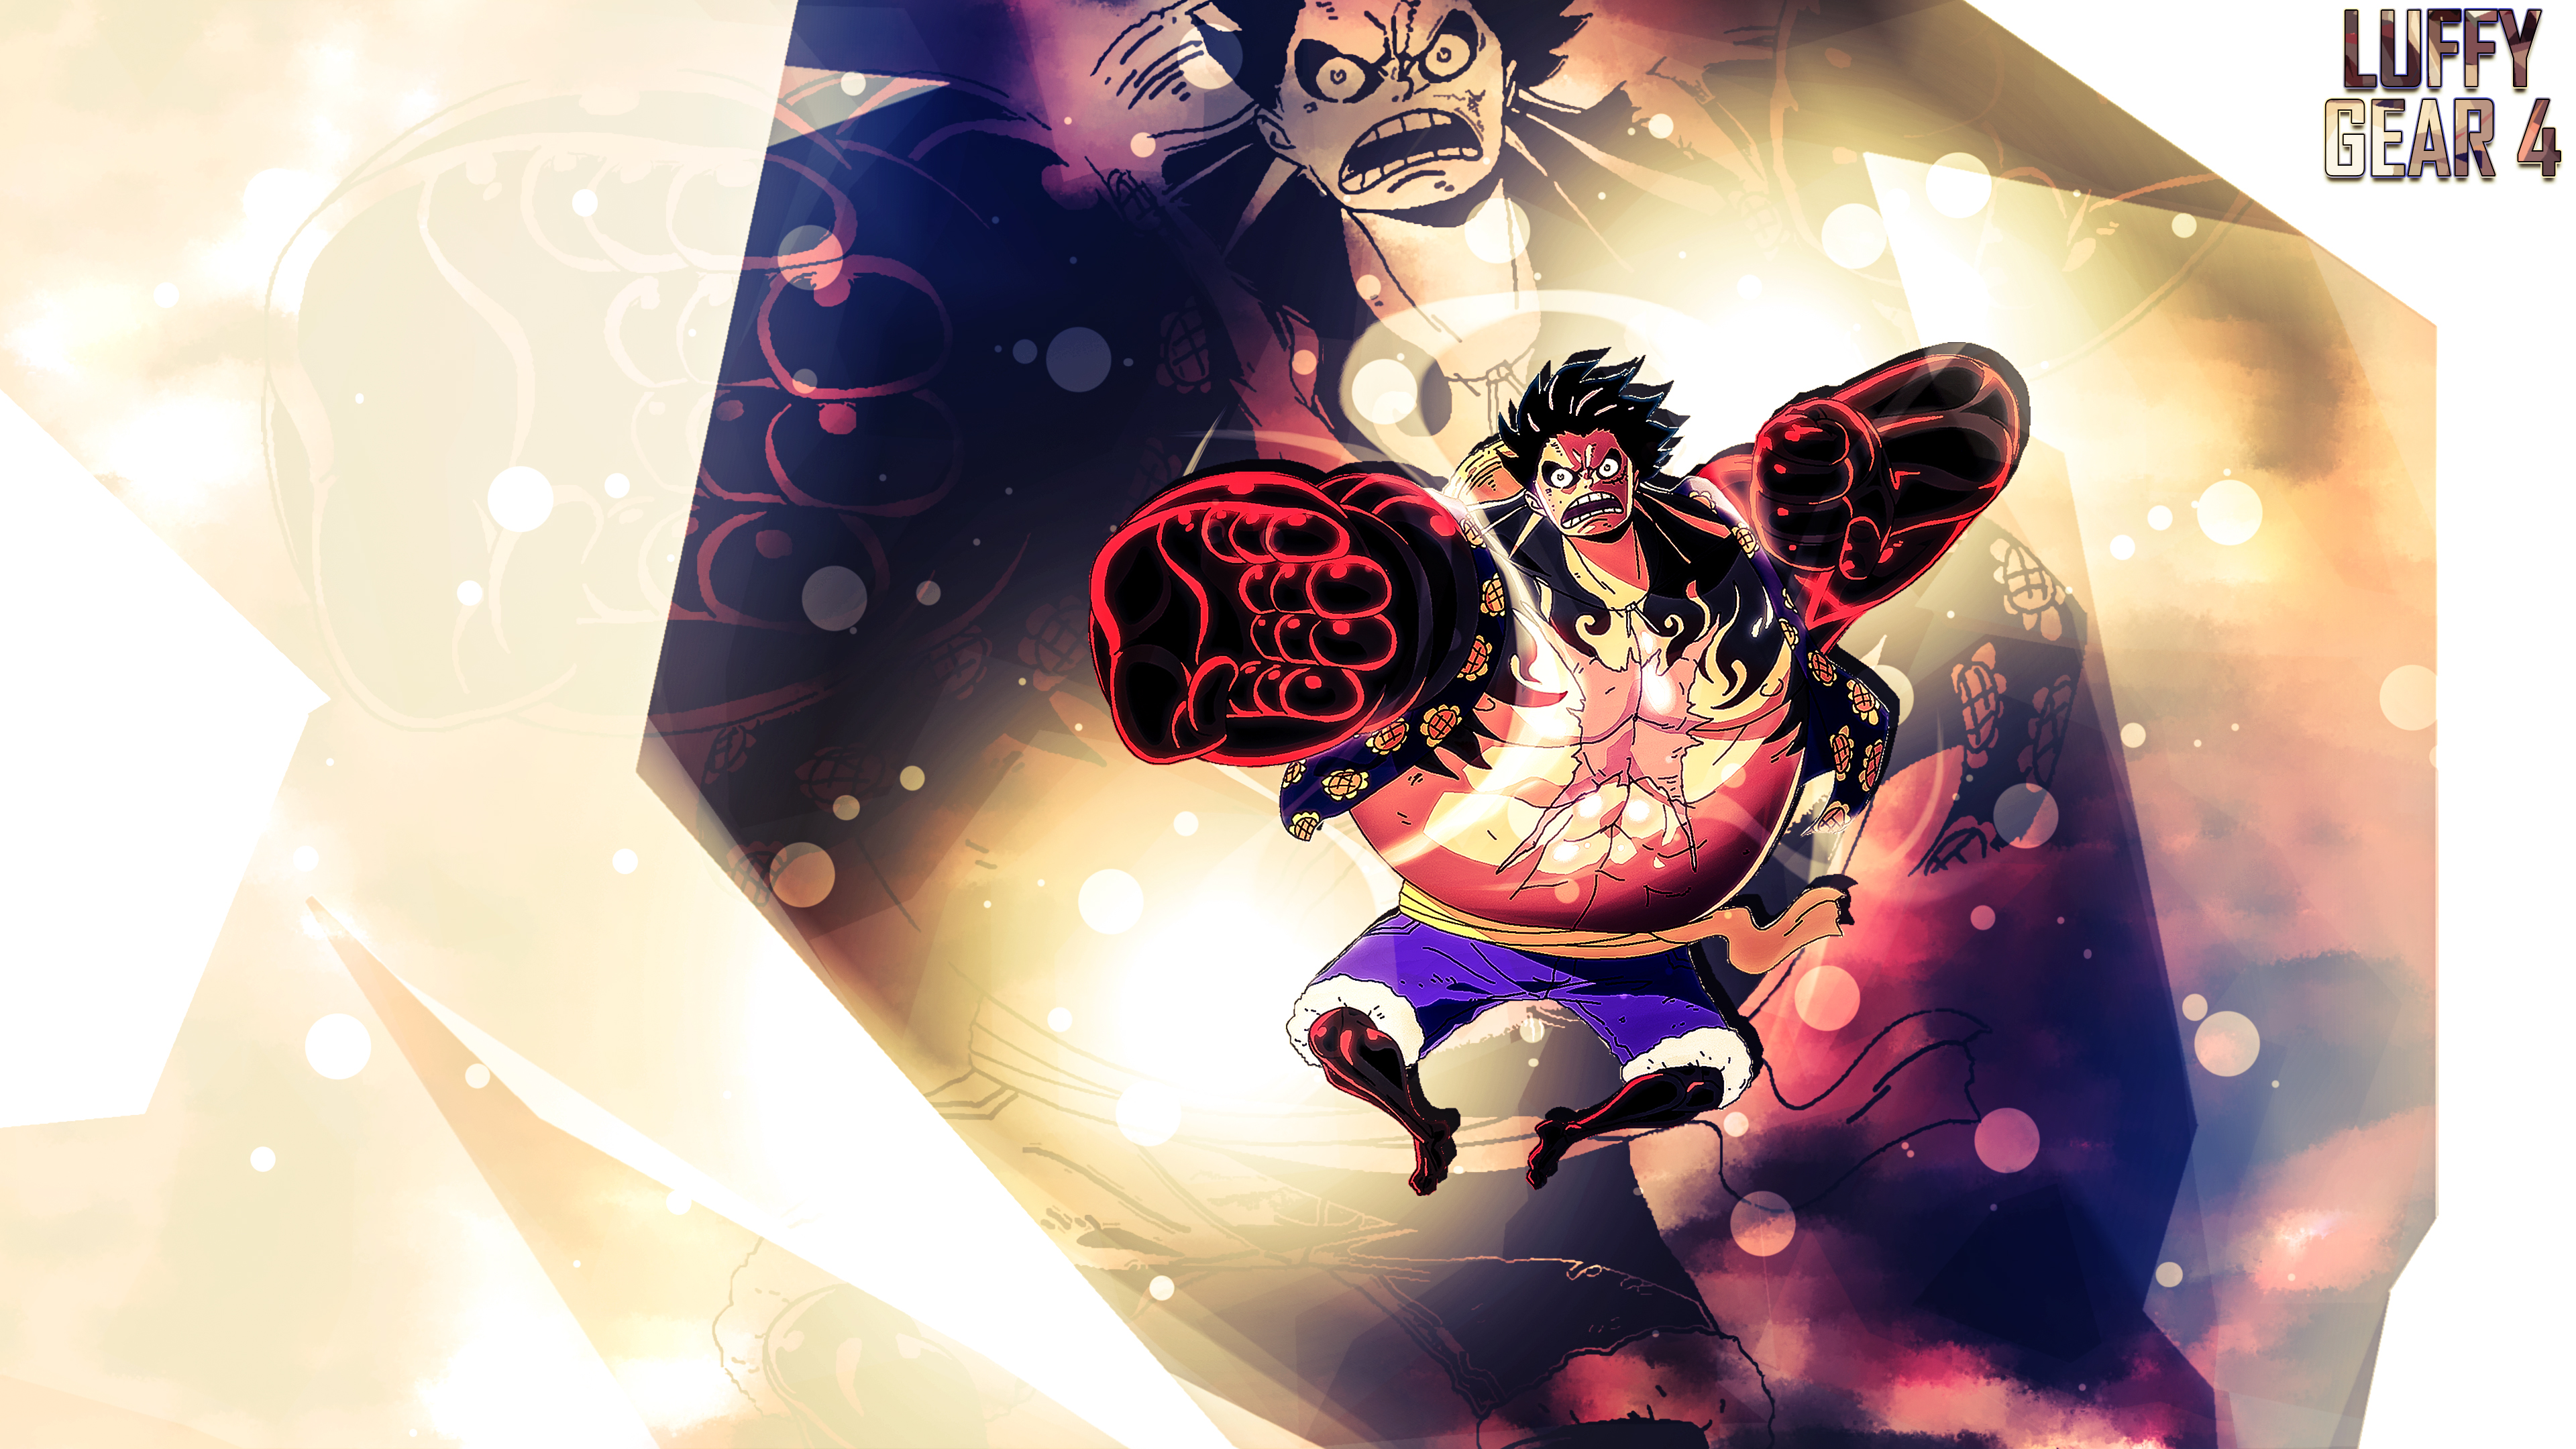 Monkey D Luffy Gear 4 One Piece By Roningfx On Deviantart